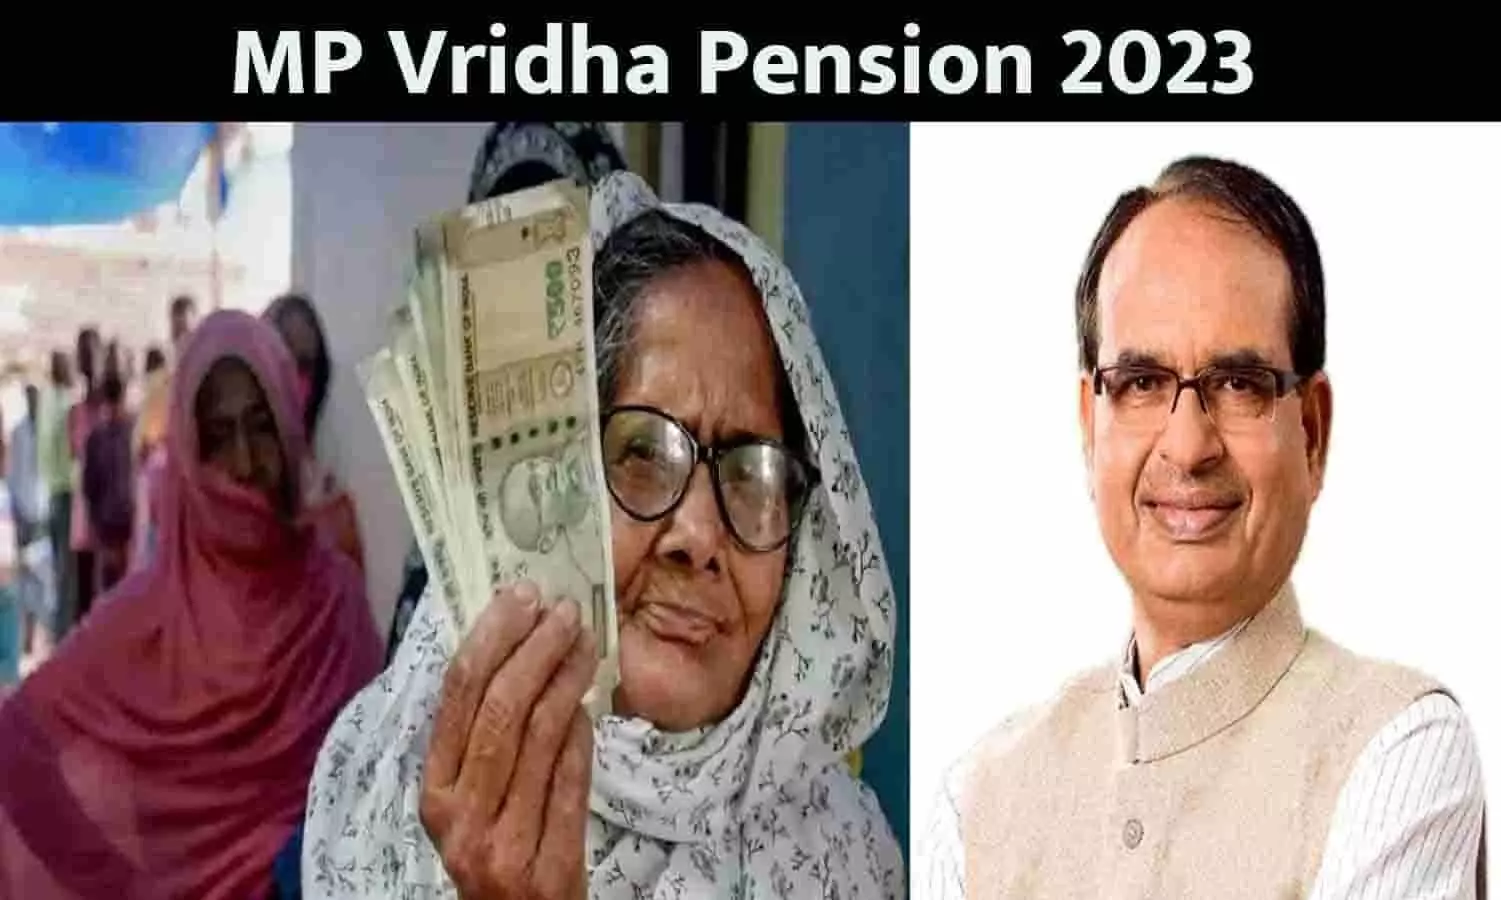 MP Vridha Pension 2023